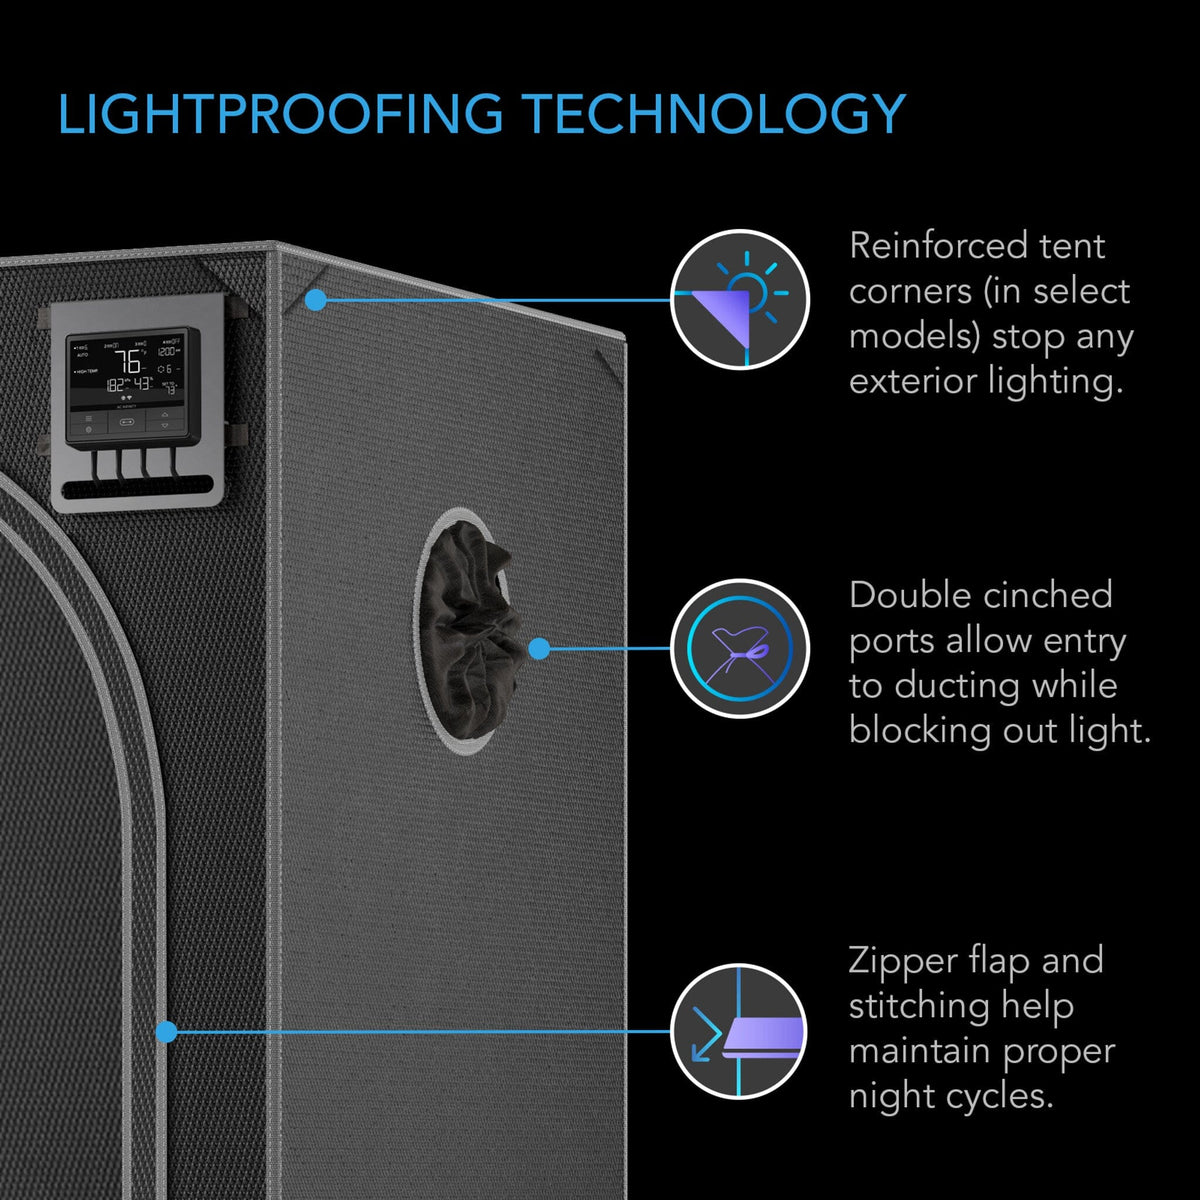 Lightproofing technology